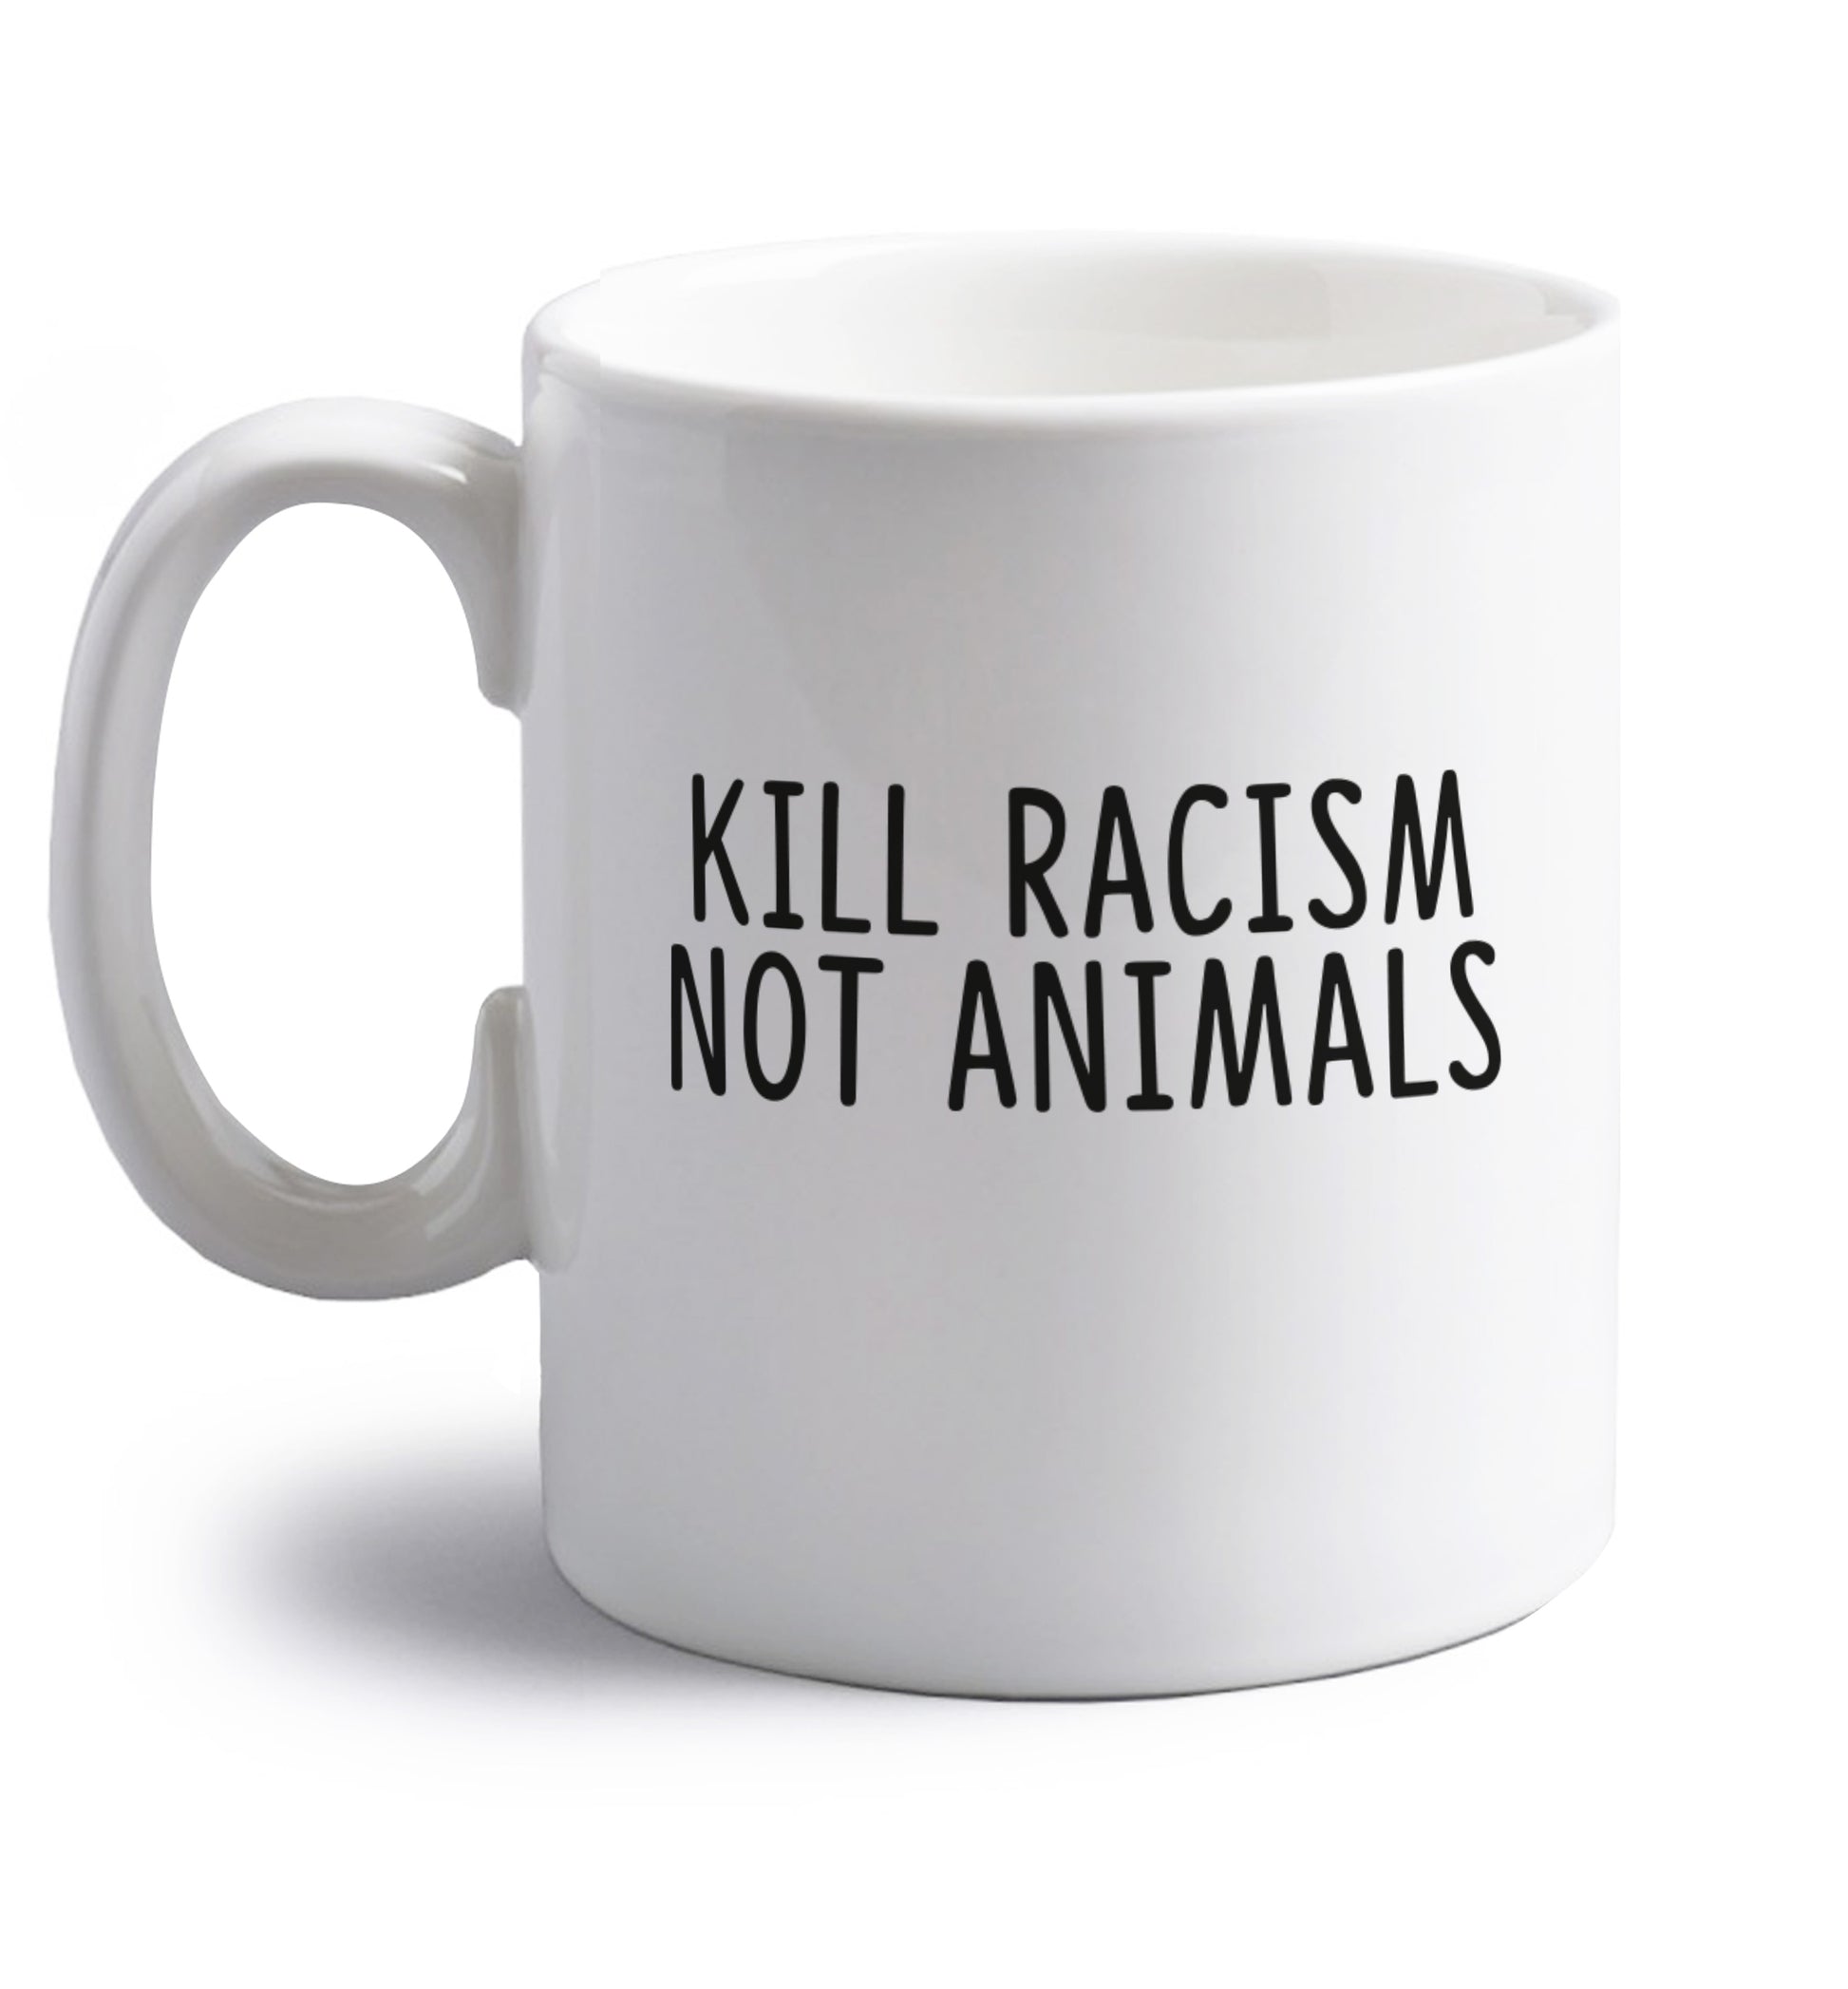 Kill Racism Not Animals right handed white ceramic mug 